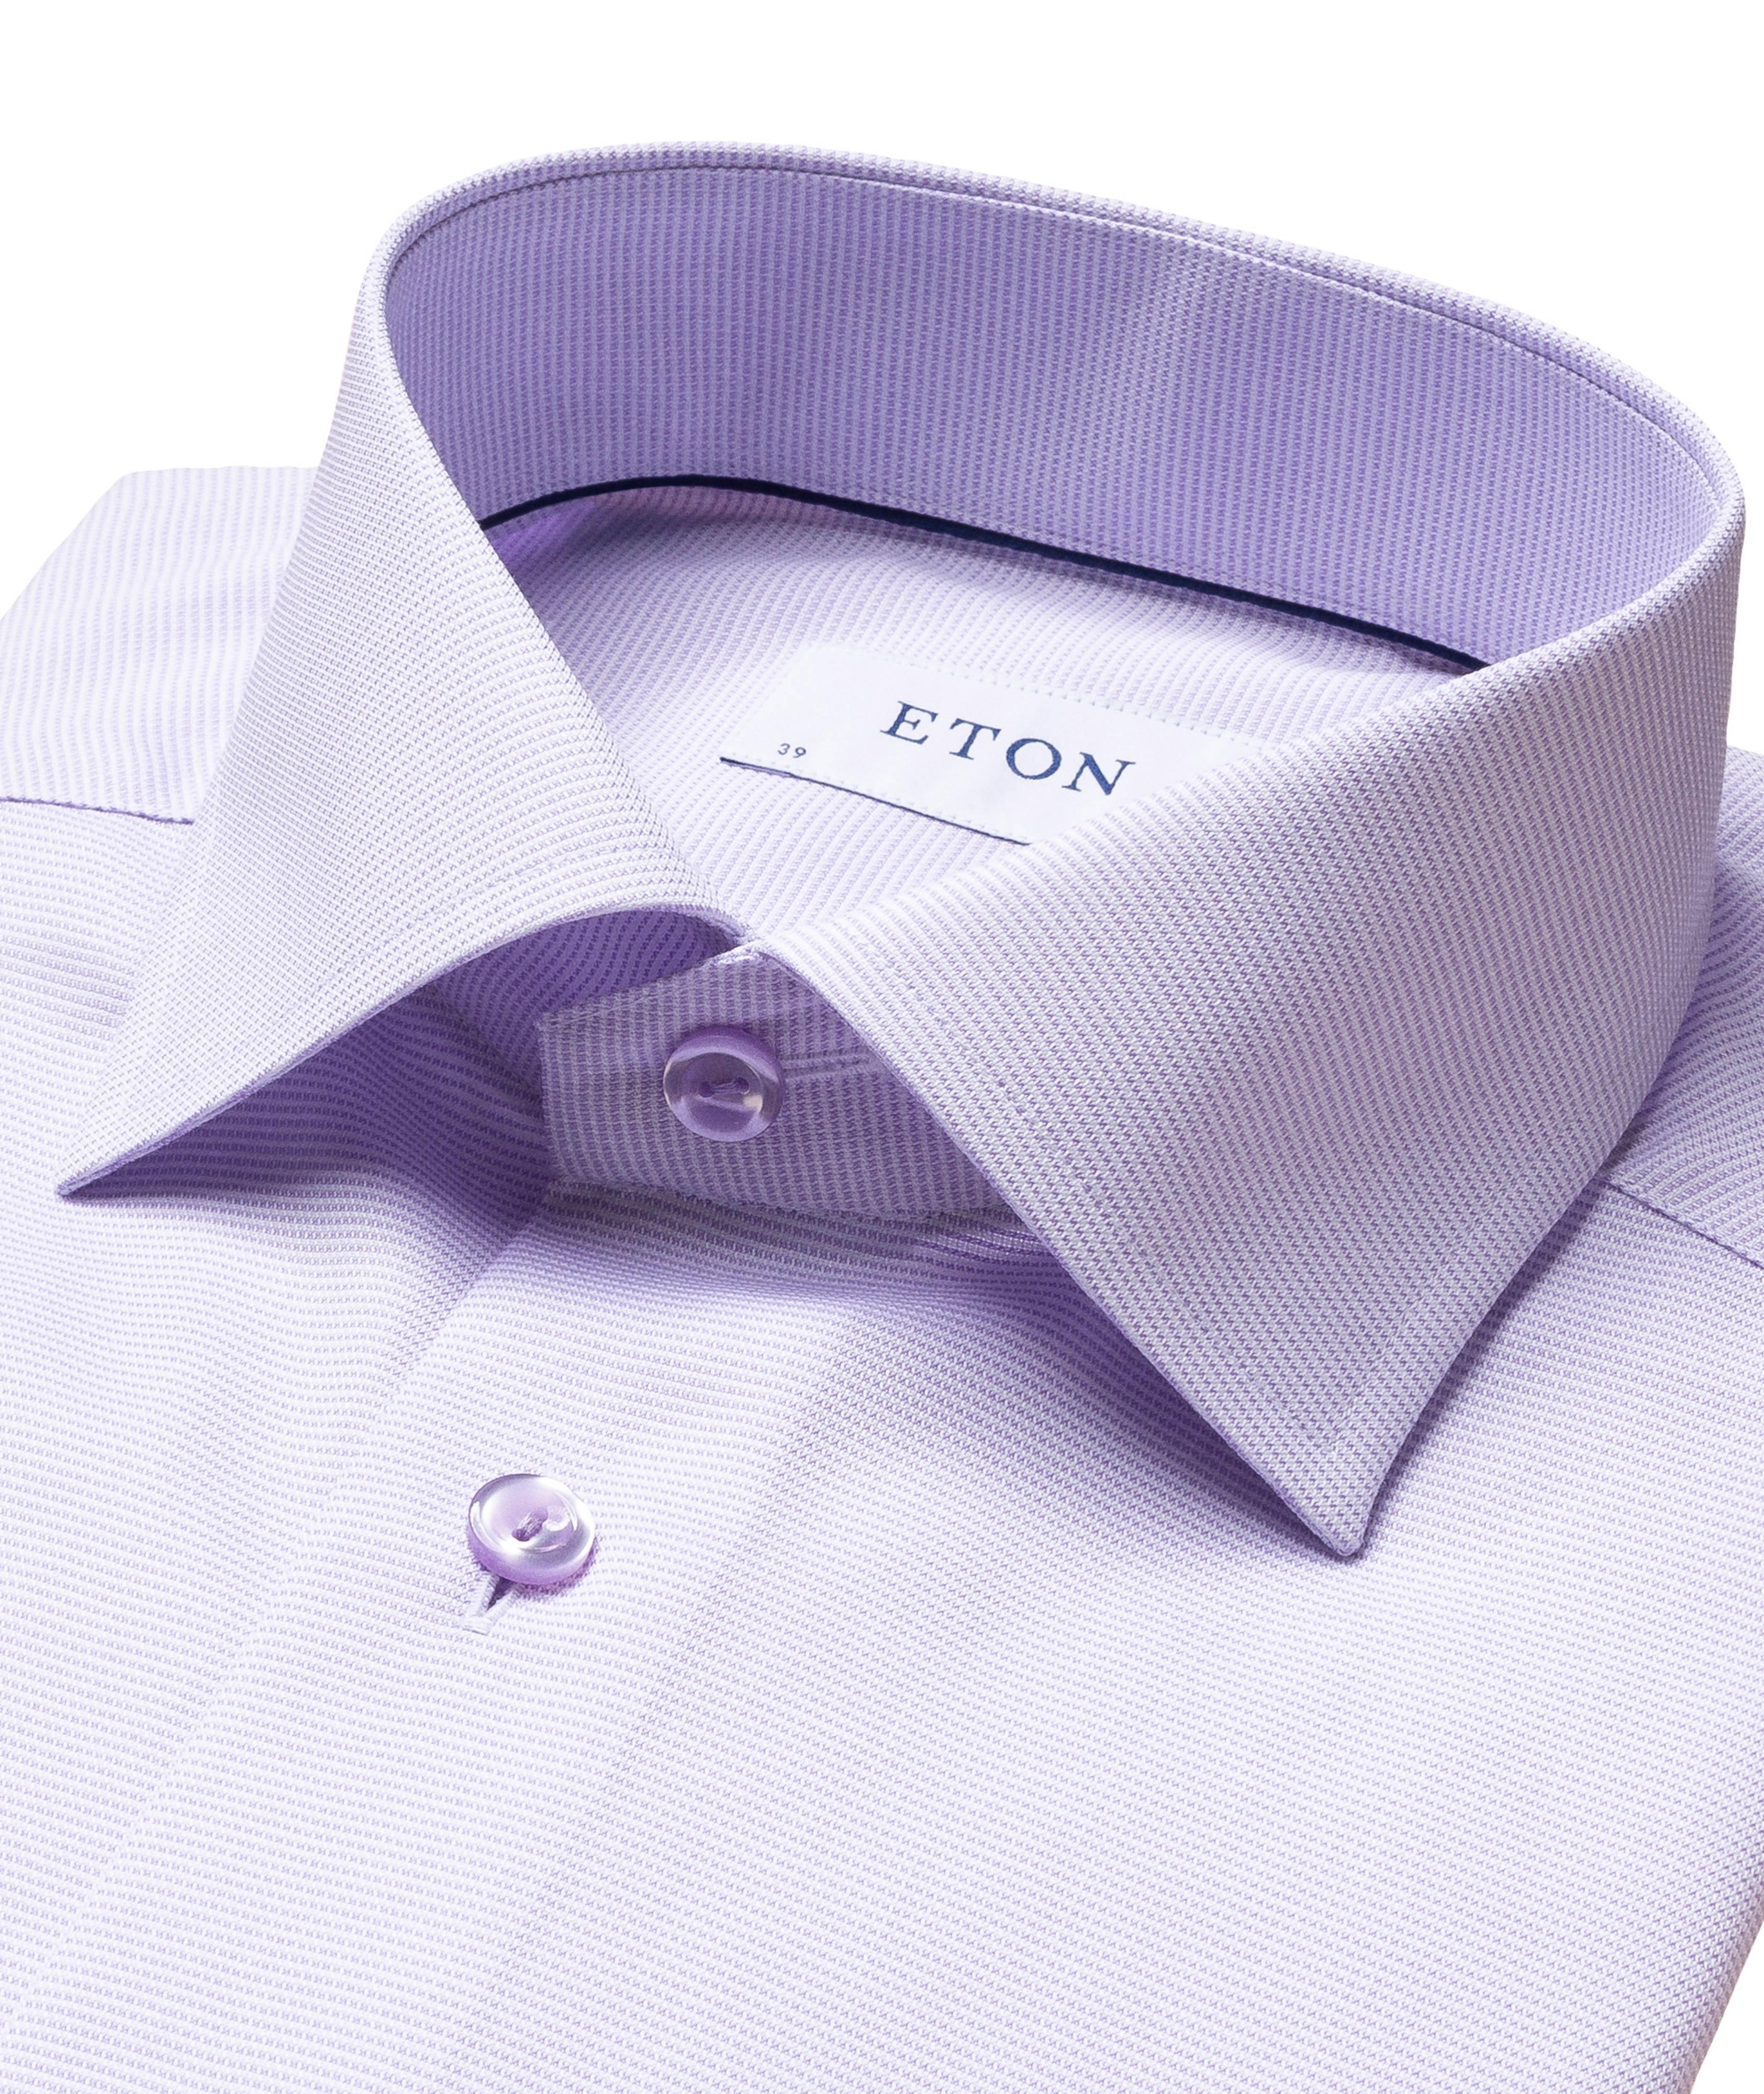 Slim-Fit Textured Cotton Shirt image 4